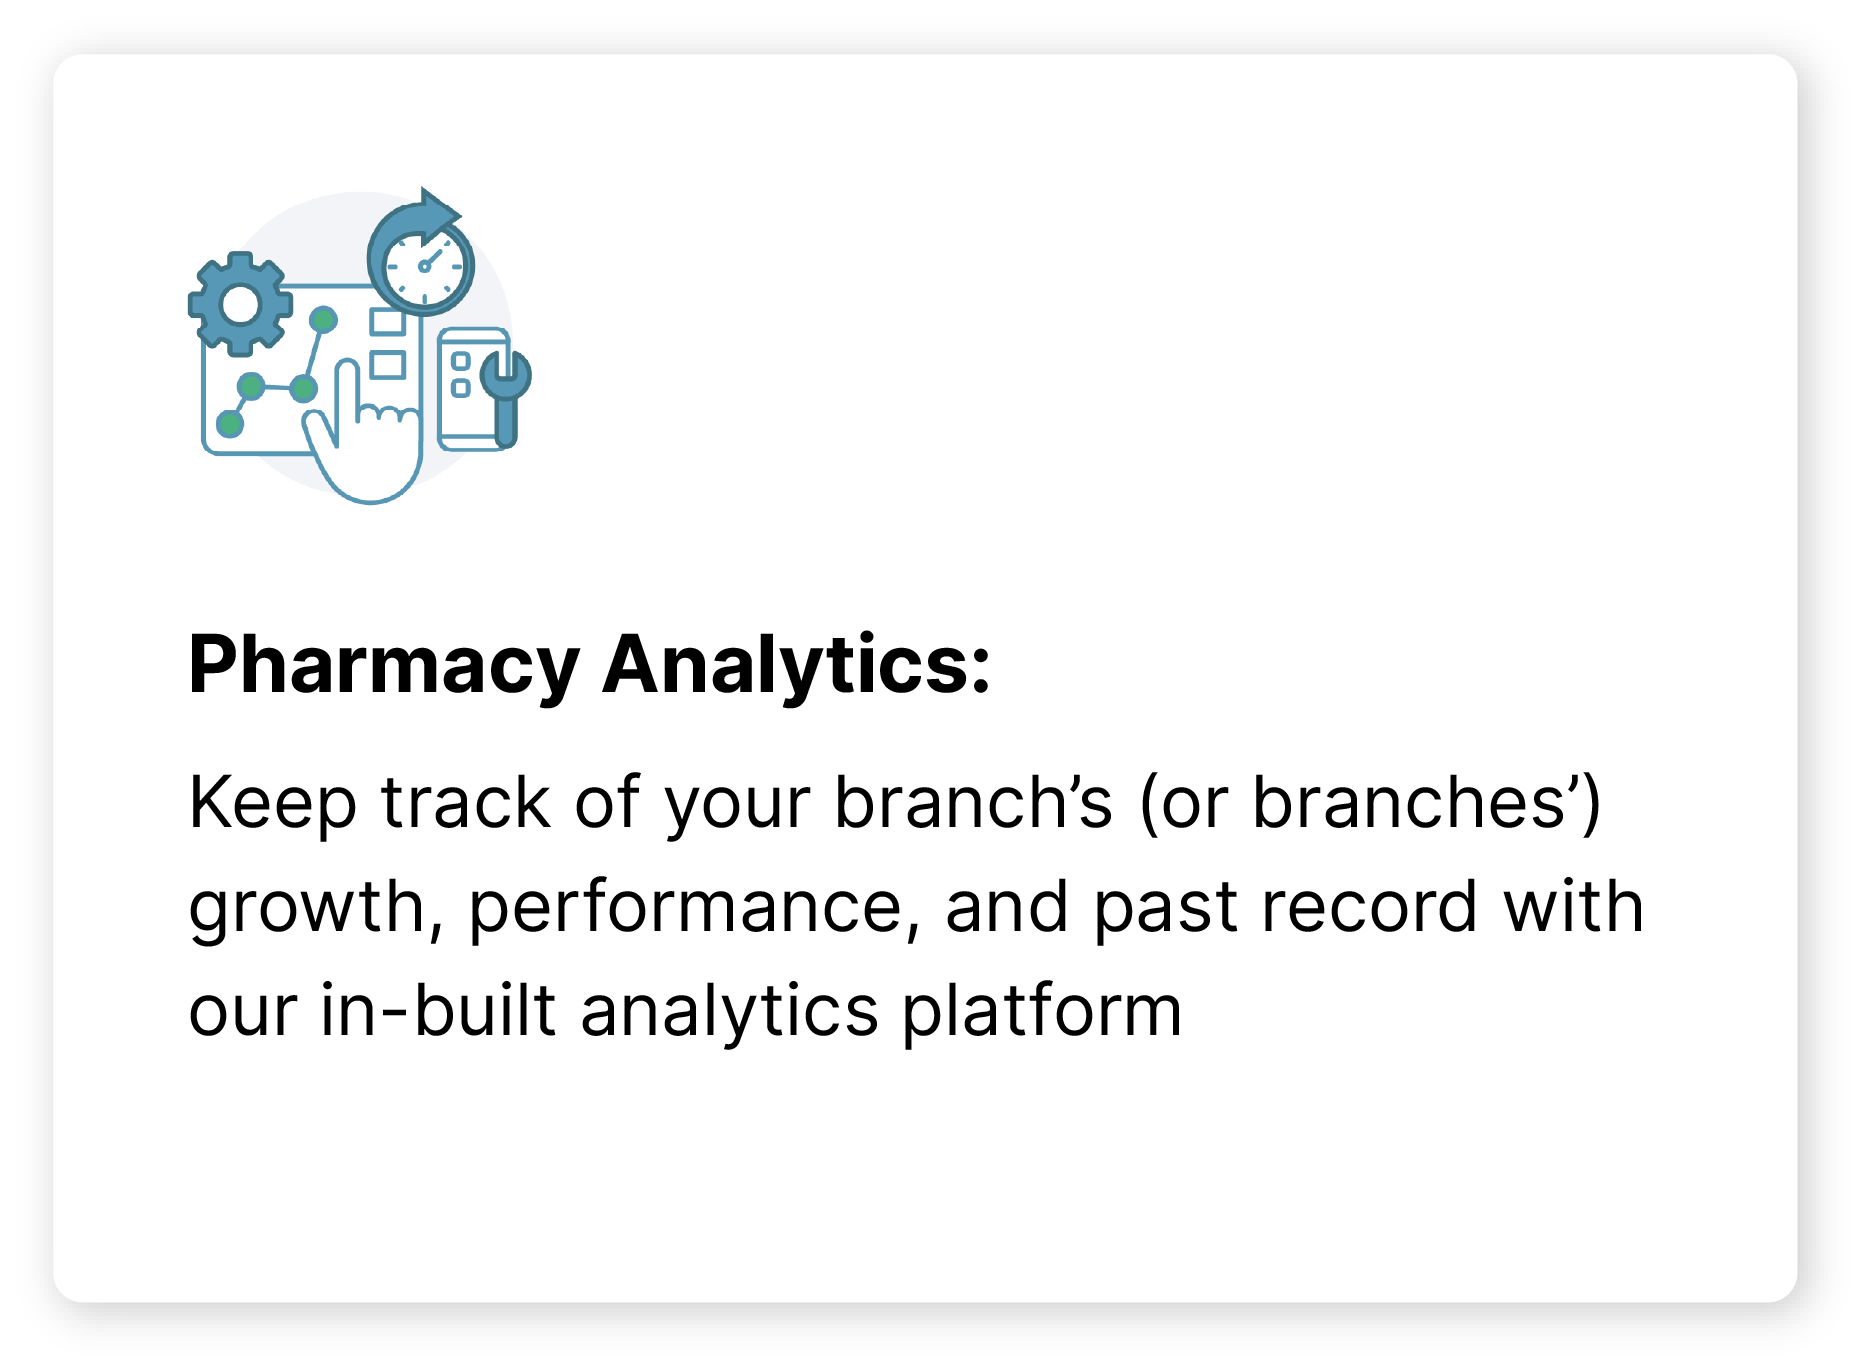 B2B Carousel - Pharmacy Analytics@4x